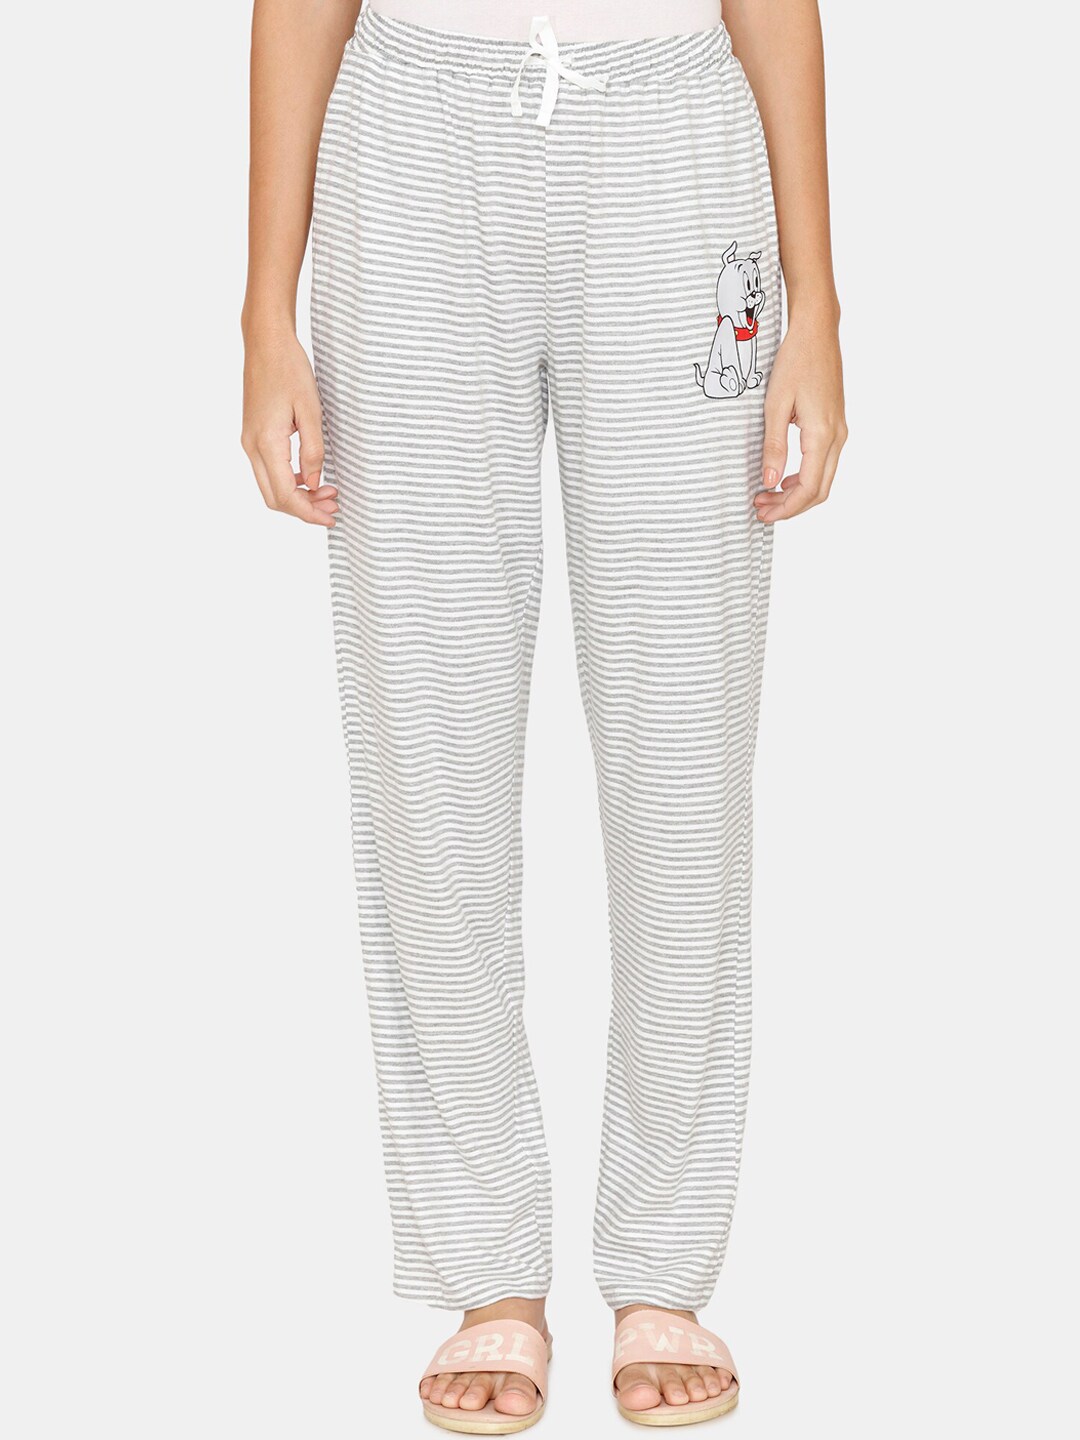 Zivame Grey Melange Tom & Jerry Striped Knitted Pyjamas Price in India